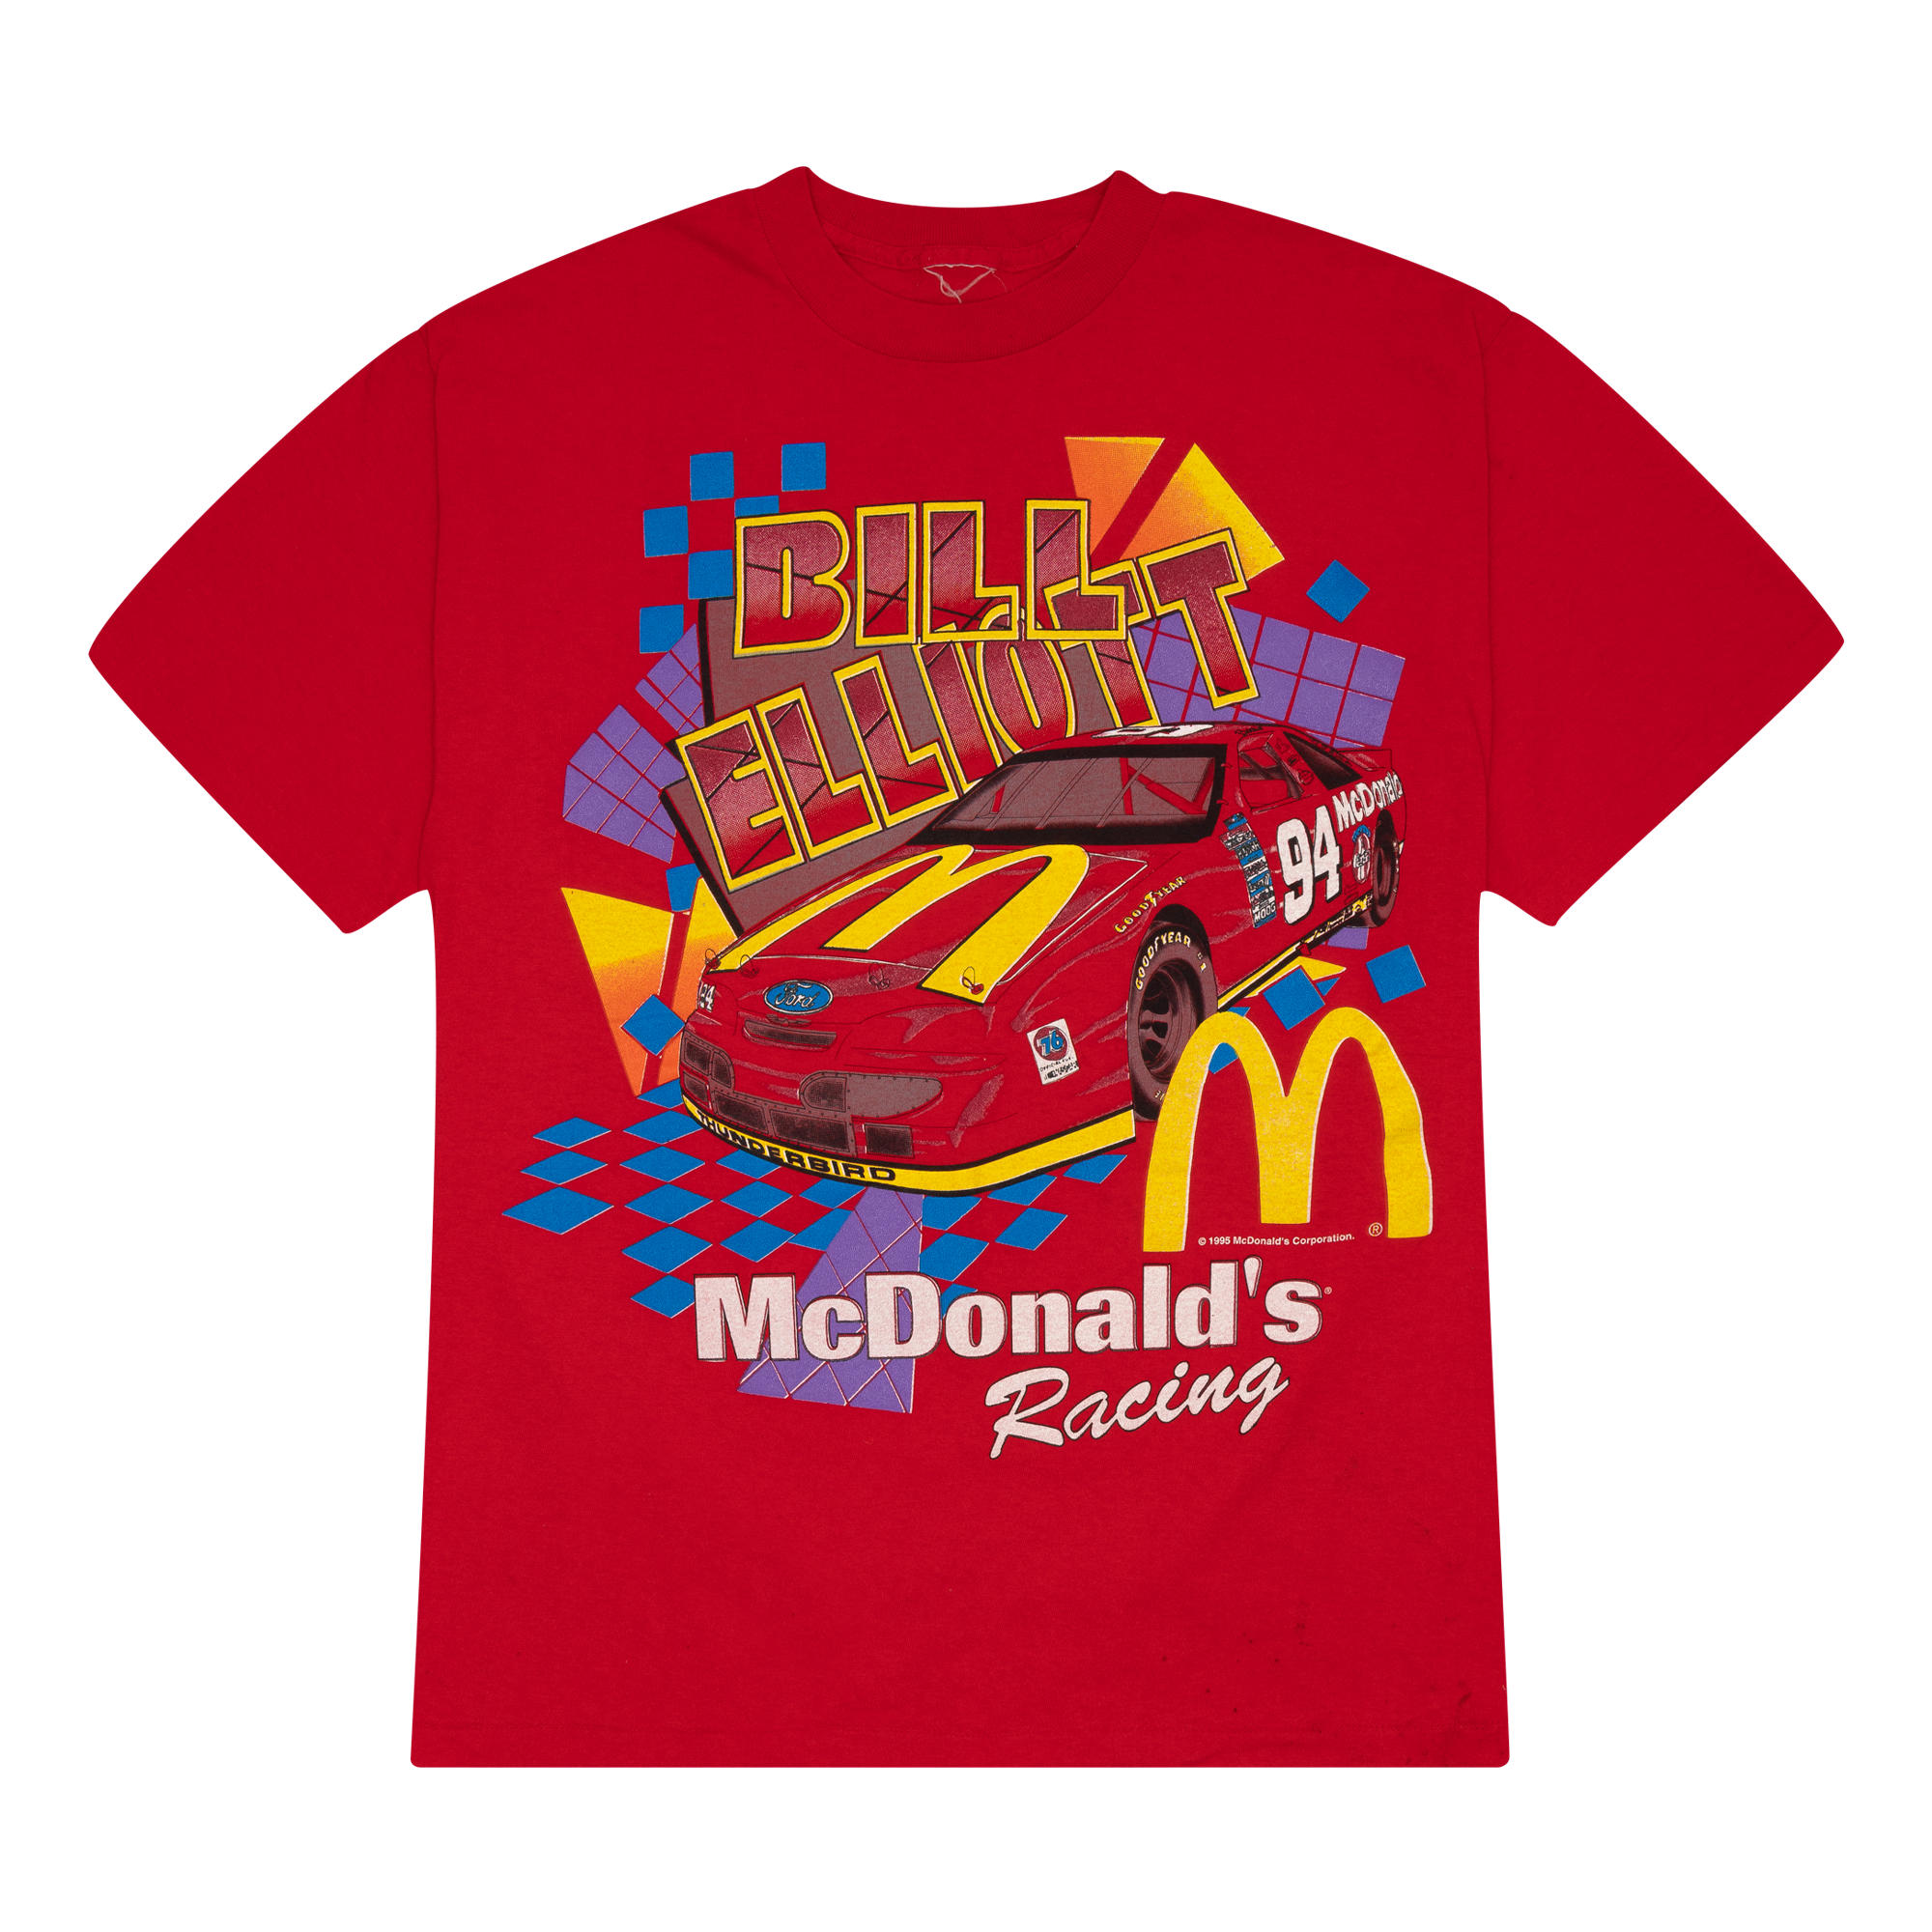 Bill Elliot 1995 McDonalds Racing Tee Red-PLUS